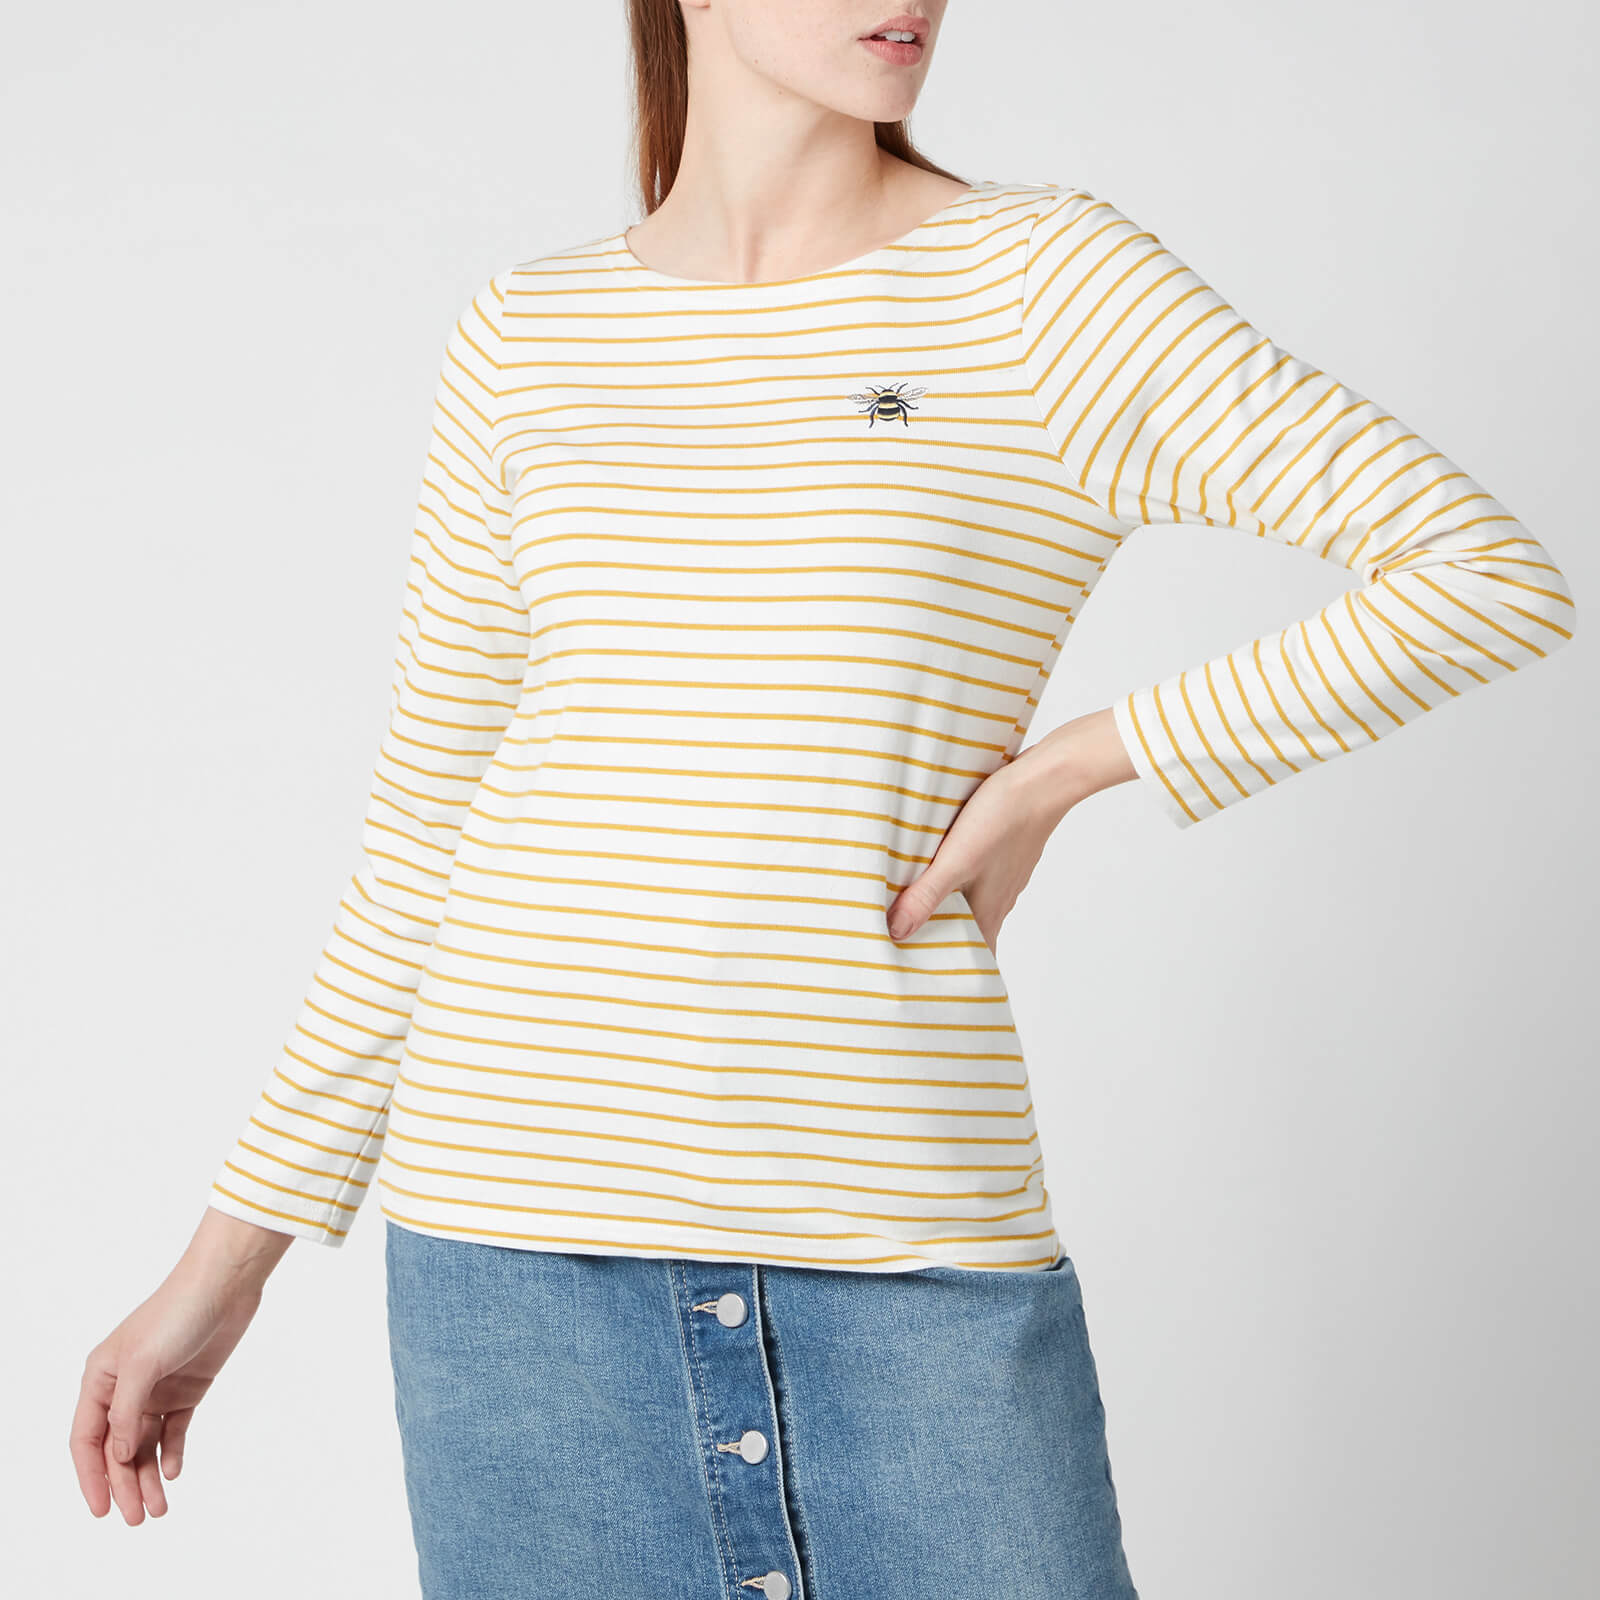 Joules Women's Harbour Print Long Sleeve Top - Cream Gold Stripe - UK 6